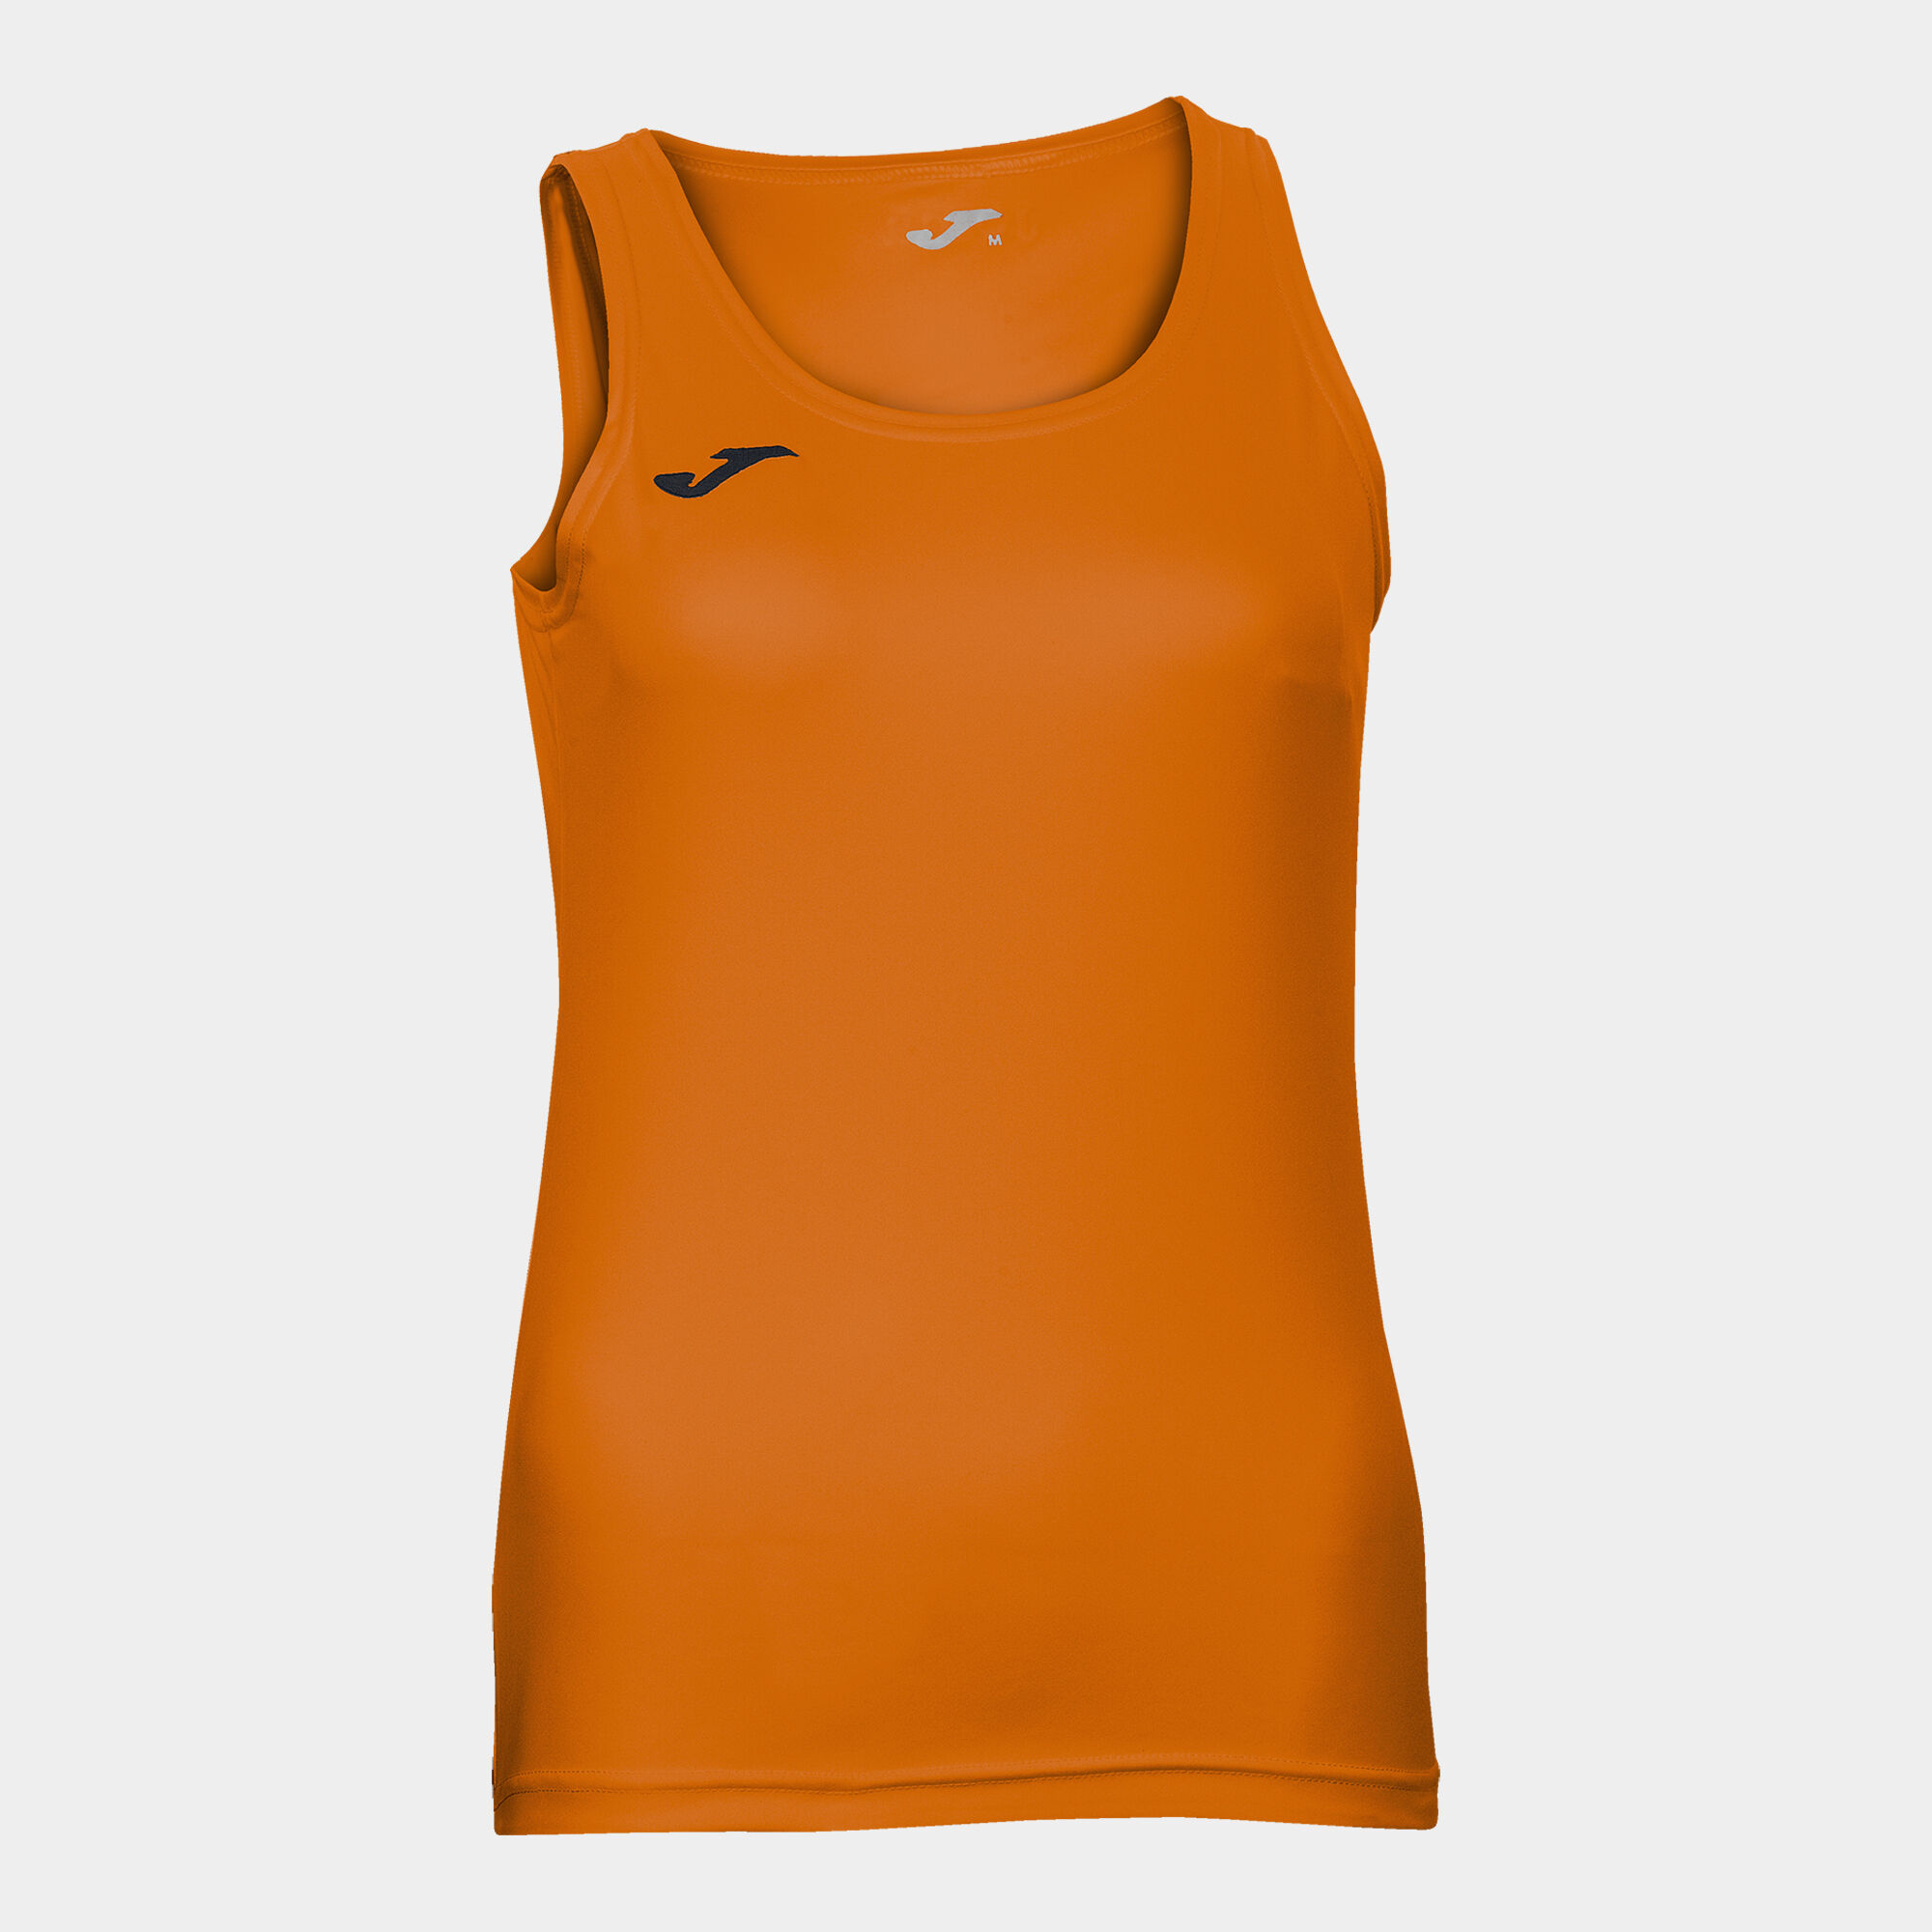 Camiseta sin mangas mujer Diana naranja